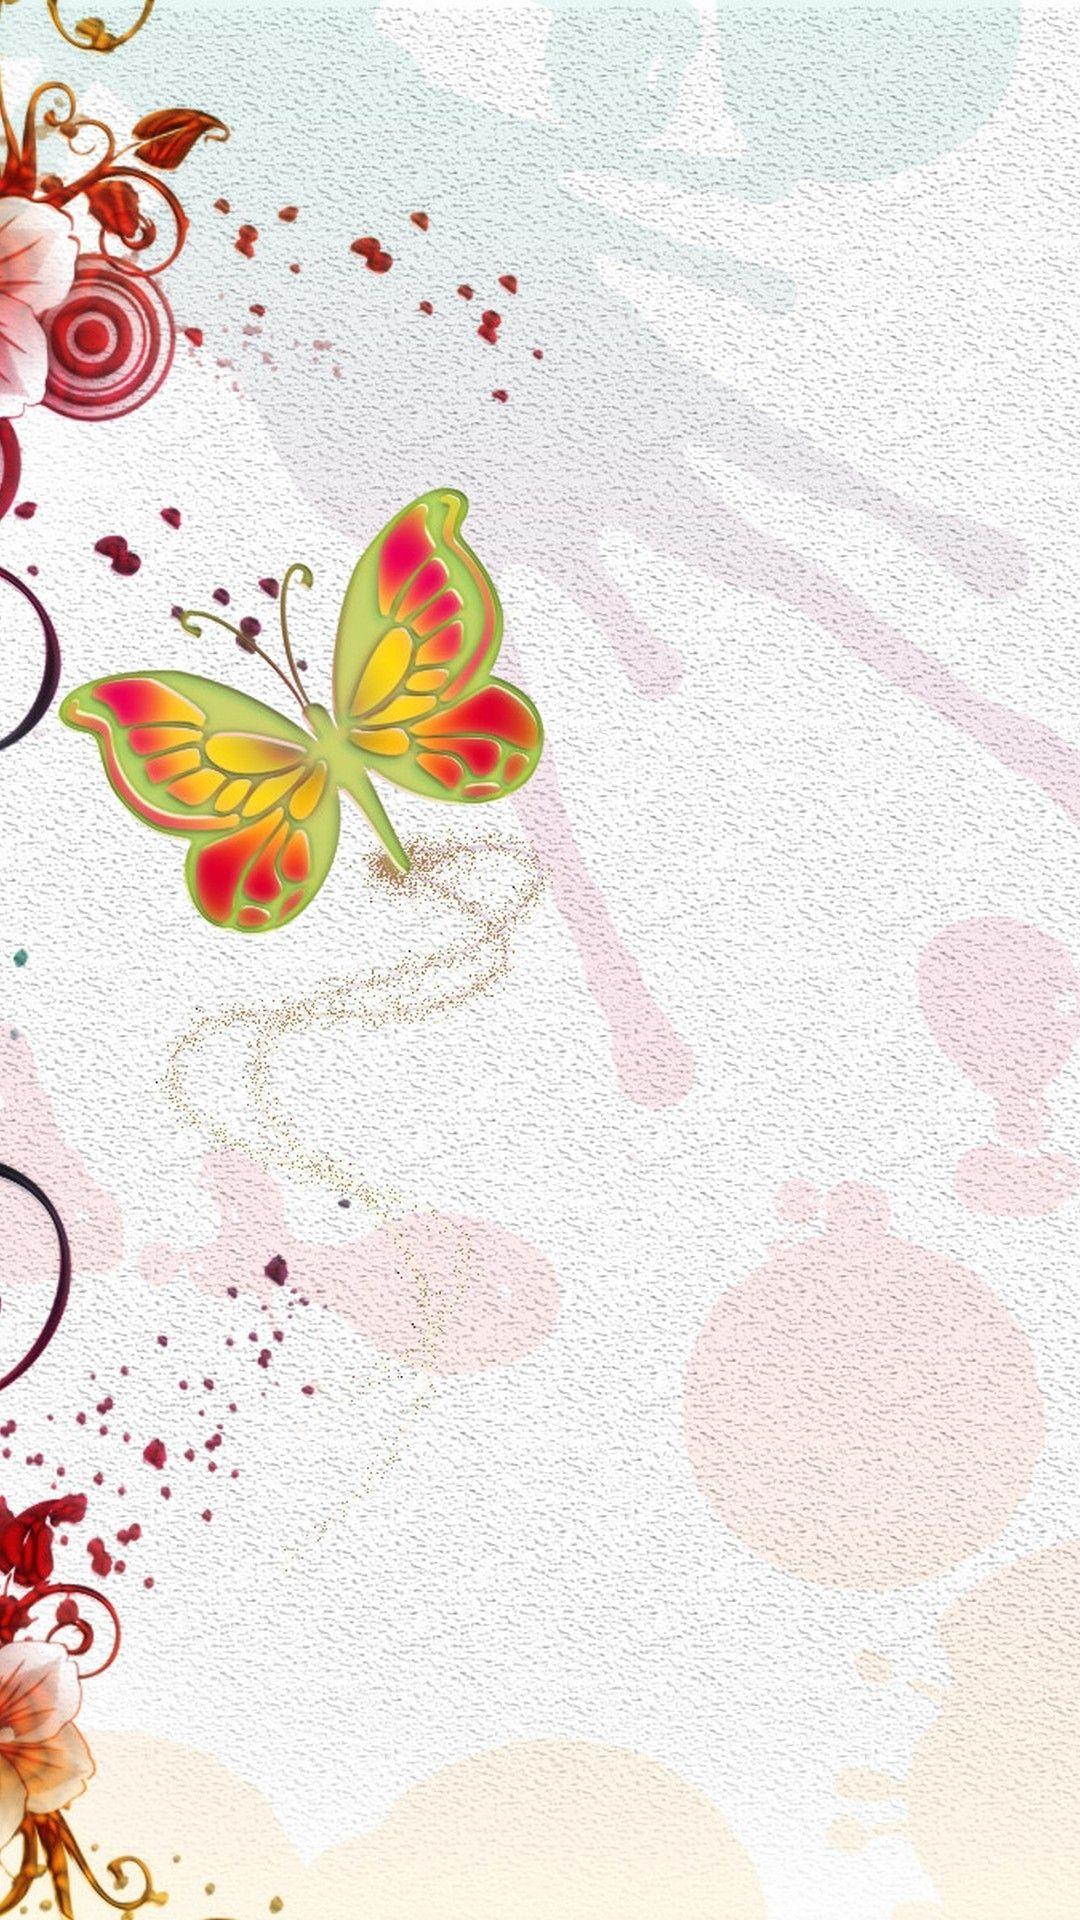 reeseybelle tjn  Pink wallpaper iphone, Butterfly wallpaper iphone, Pretty  wallpaper iphone